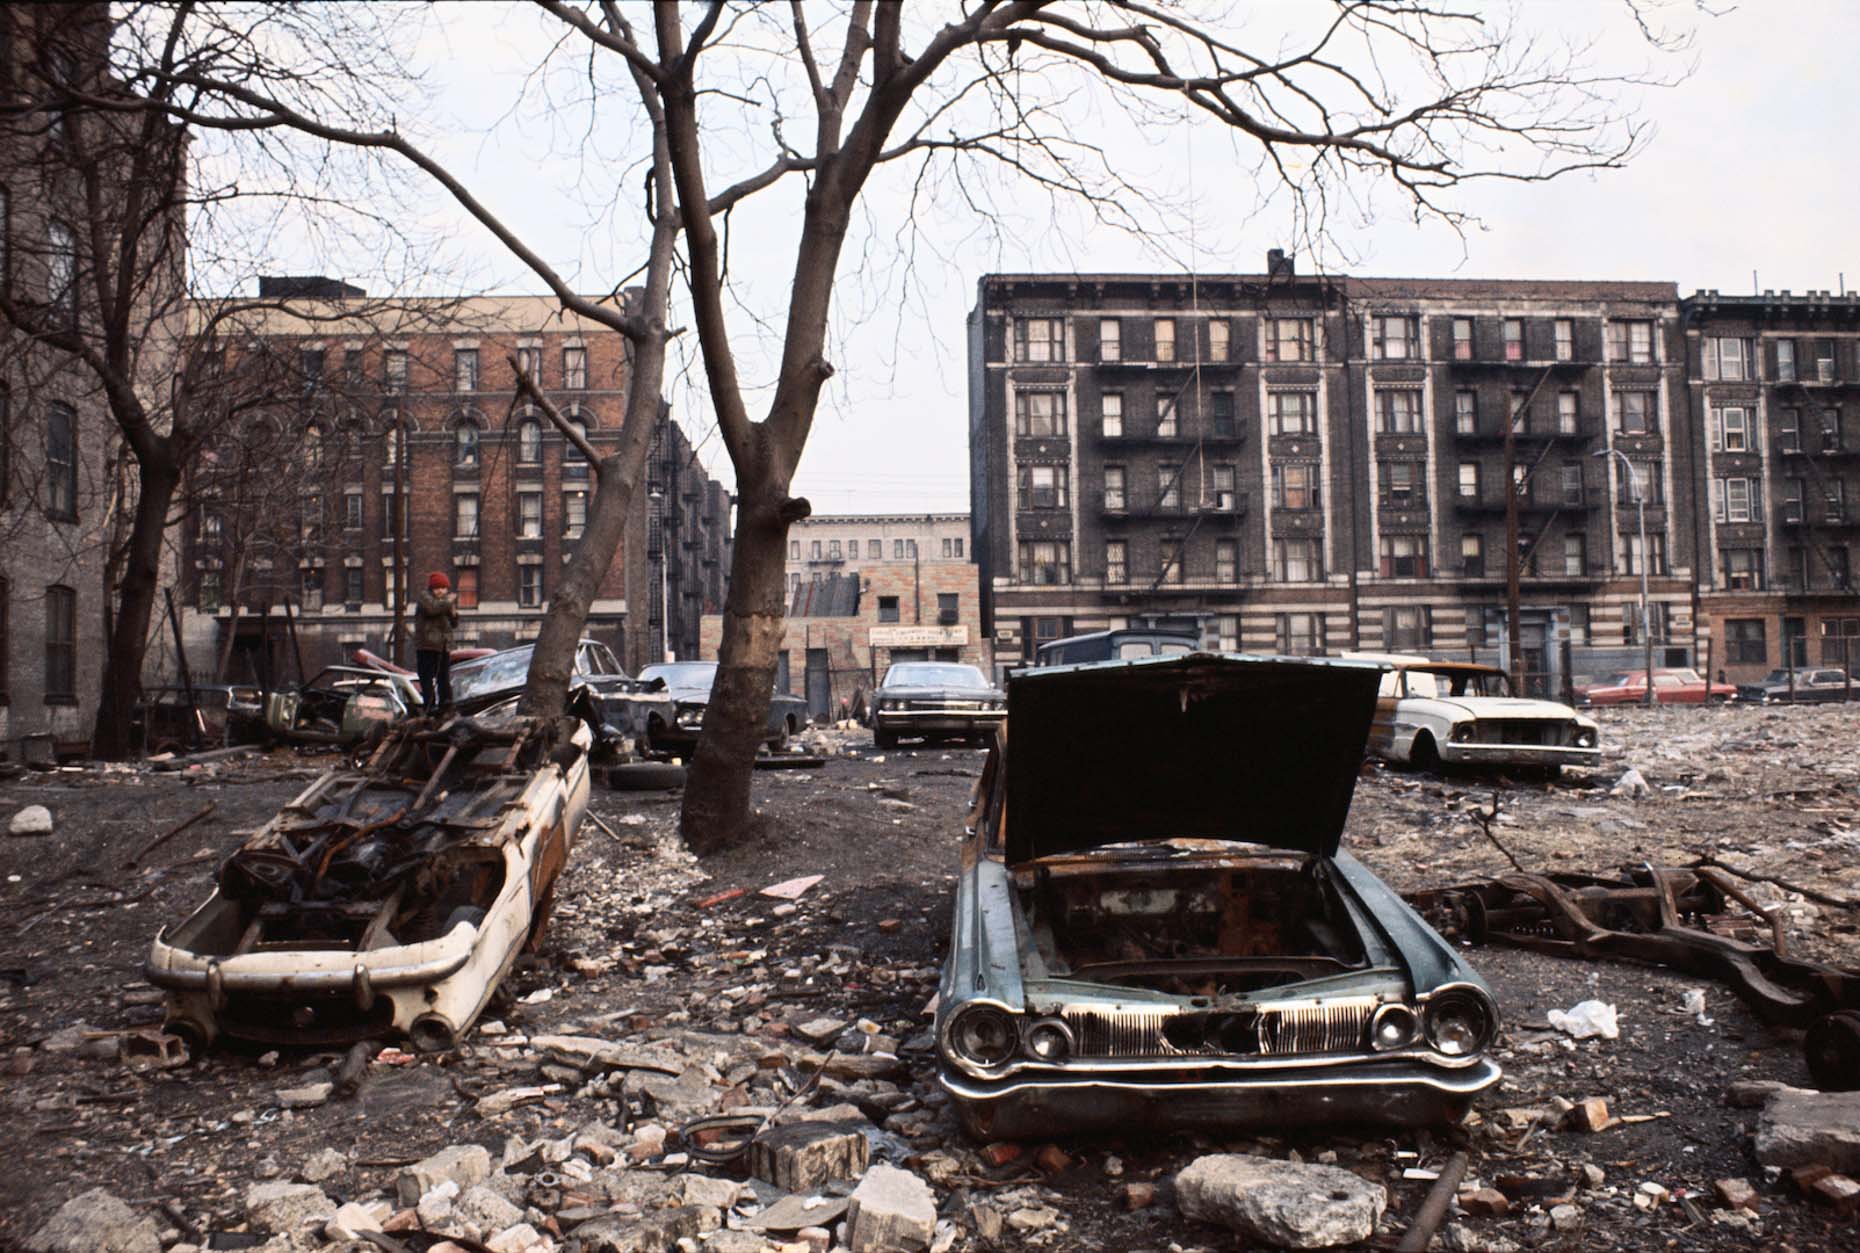 Жалкое место. Южный Бронкс Нью-Йорк. Нью-Йорк Бронкс улицы. Южный Бронкс трущобы. Нью Йорк Бронкс 1970.